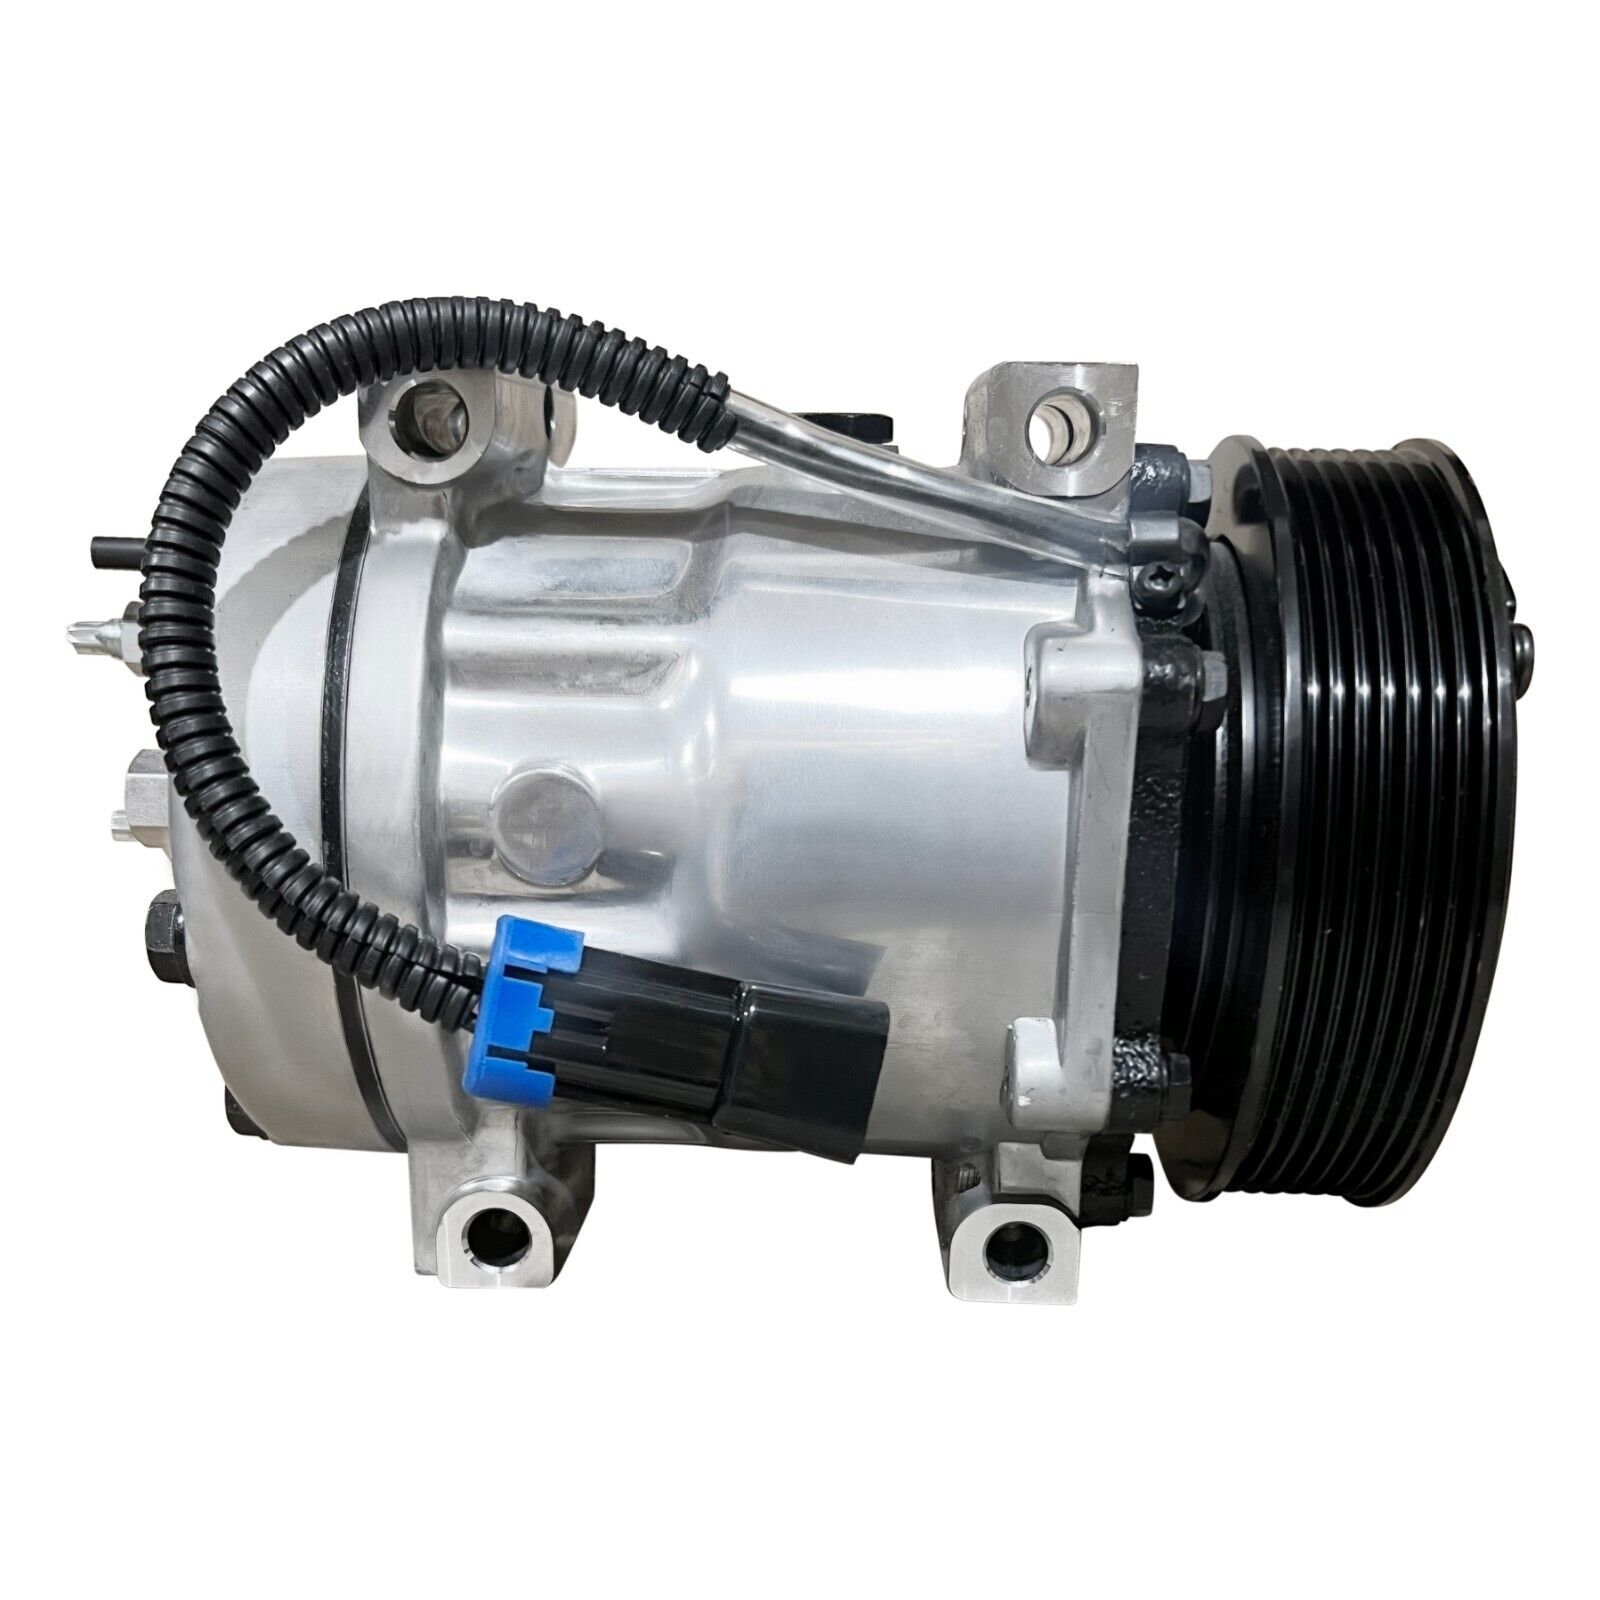 RYC New AC Compressor IH500 Fits Kenworth T880, Replaces F691013